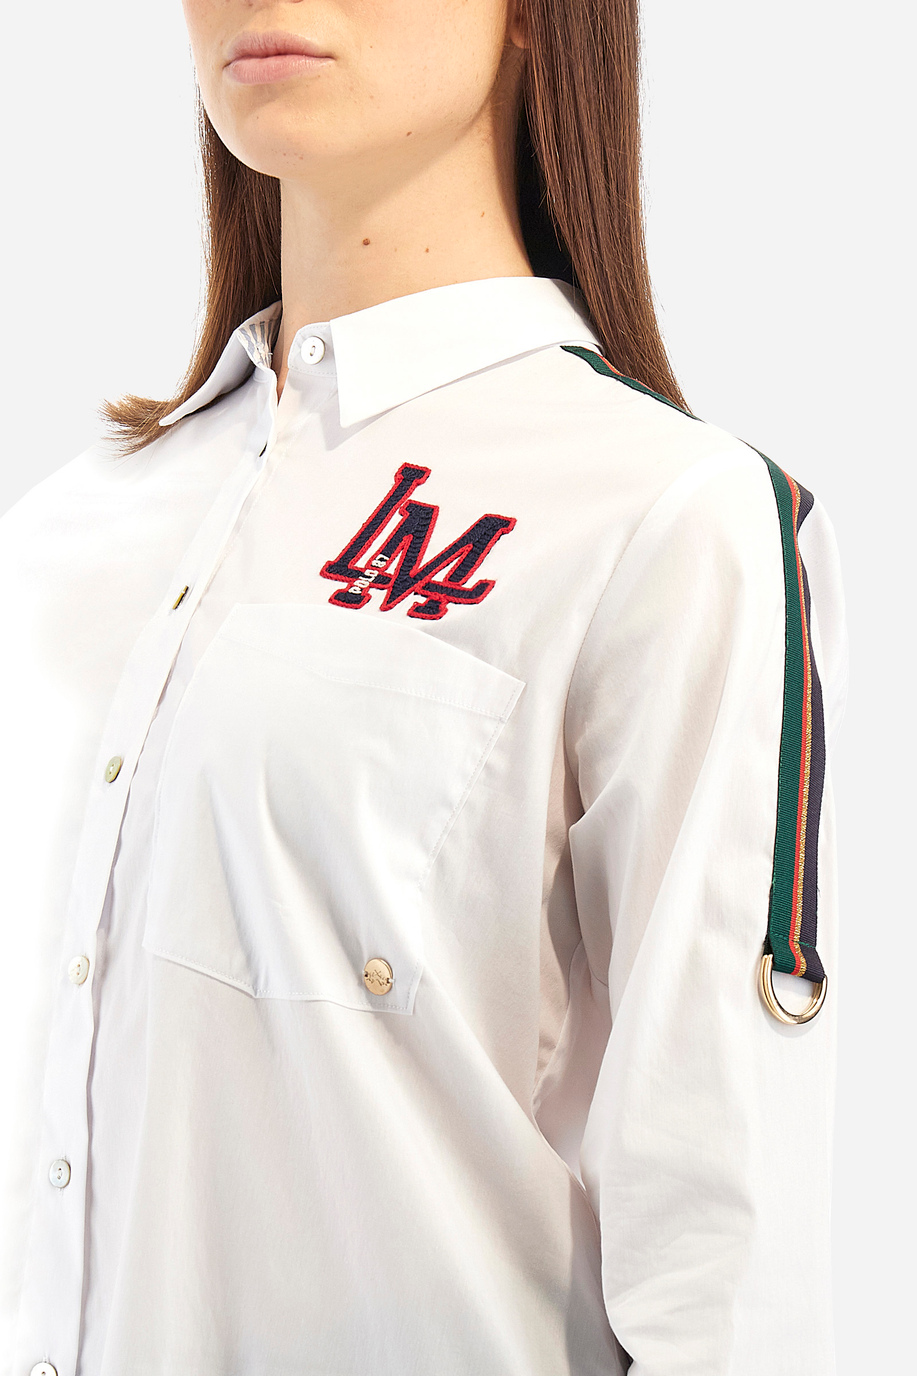 Damen-Hemd Regular Fit - Wava - Hemden | La Martina - Official Online Shop